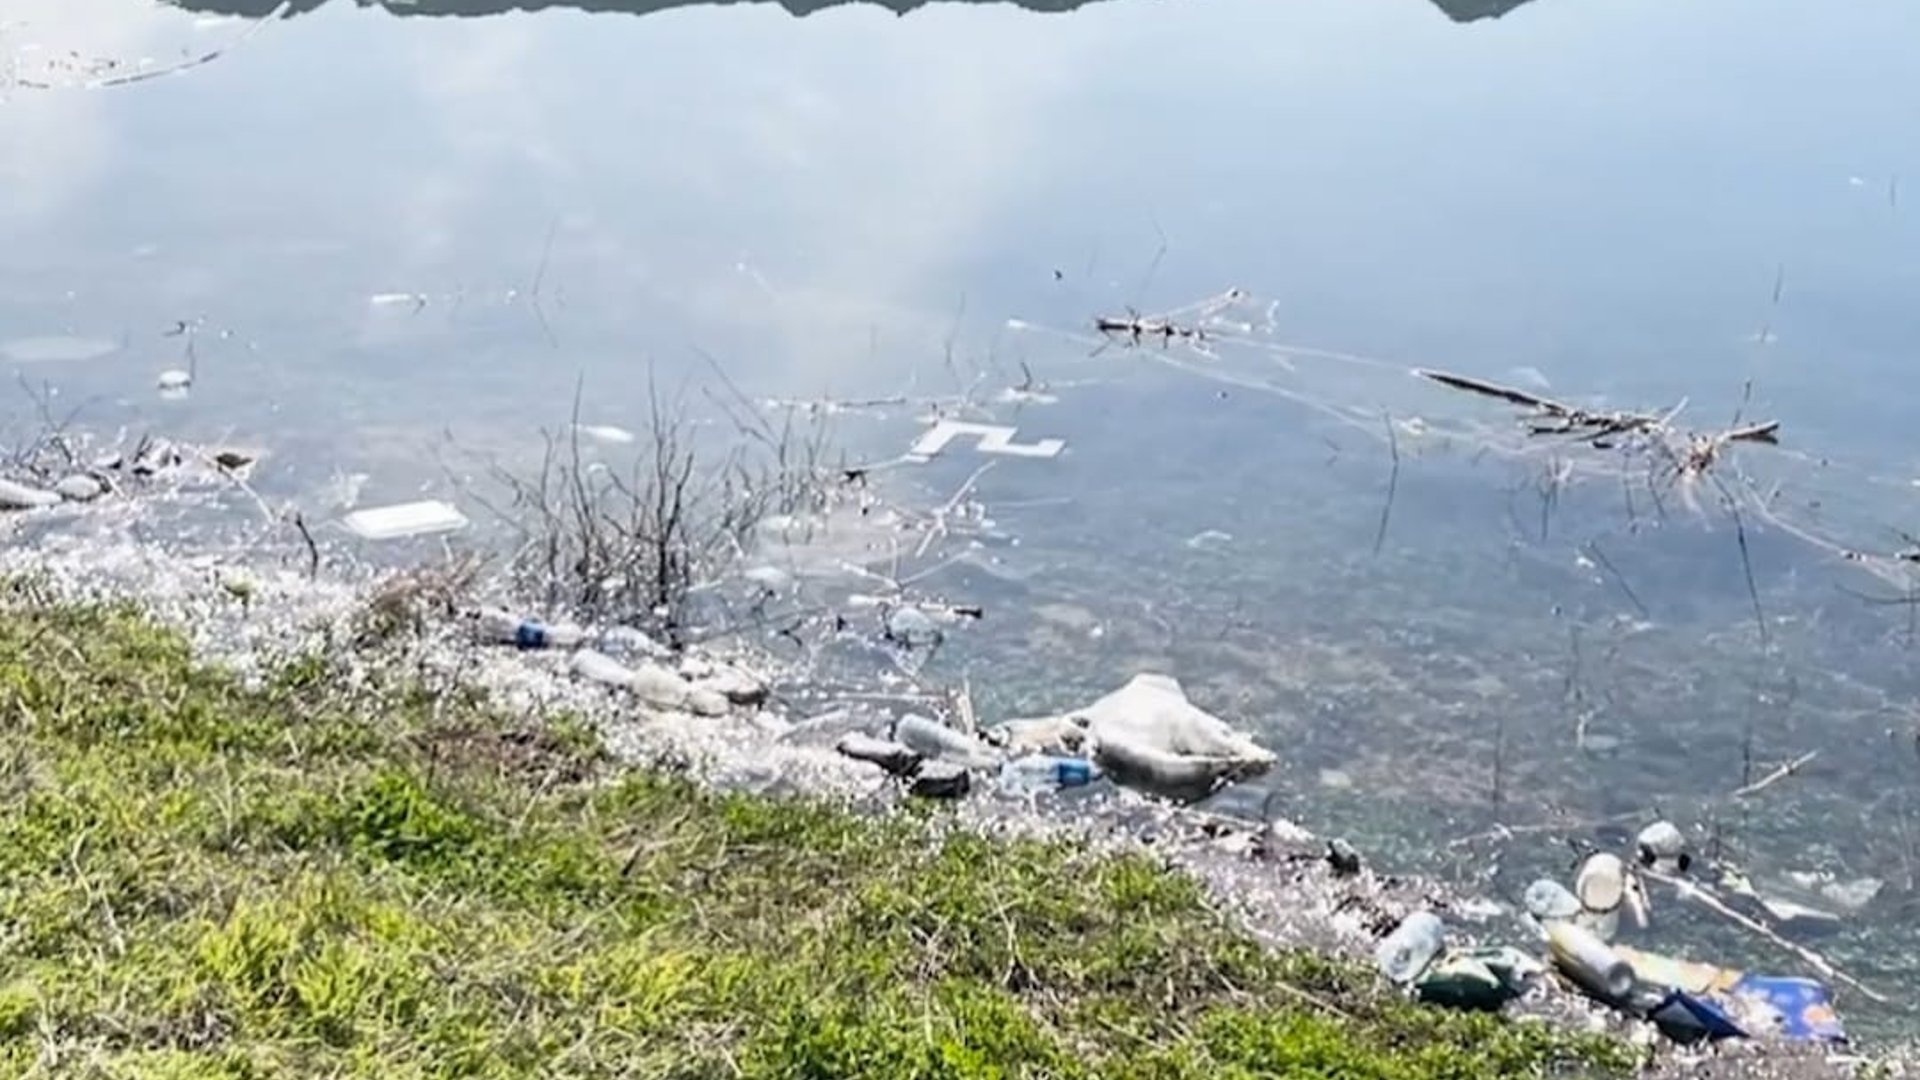 Duhok Dam faces waste management crisis as officials shift blame